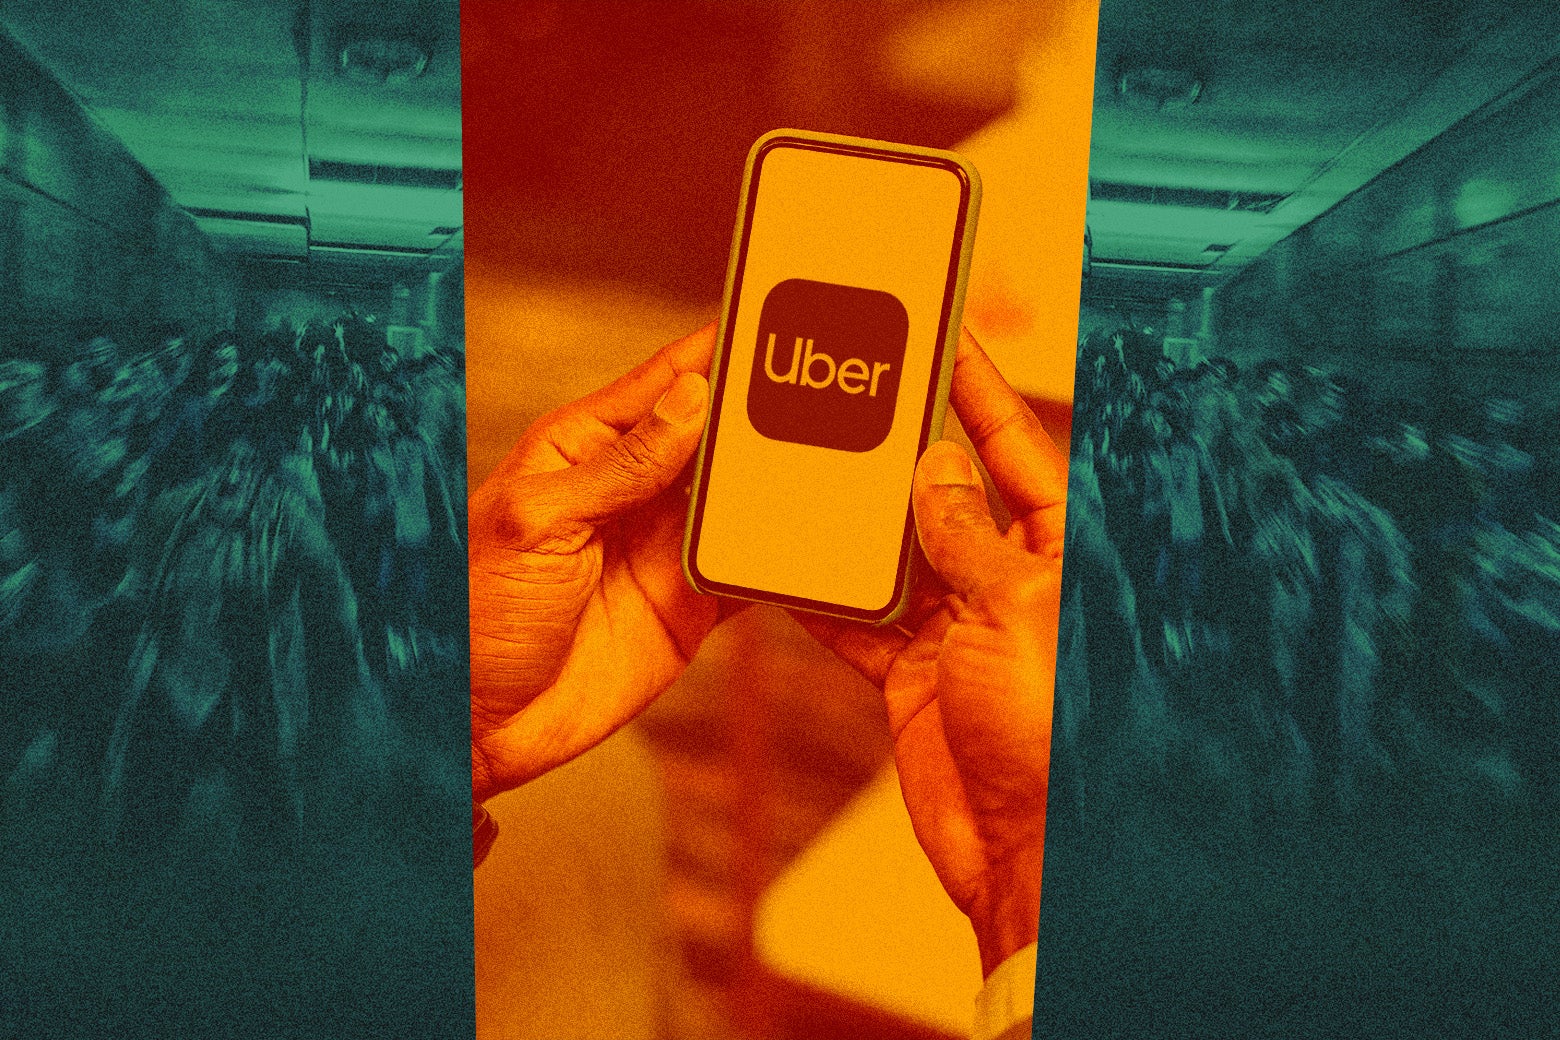 An Uber app logo against a blurry crowd.